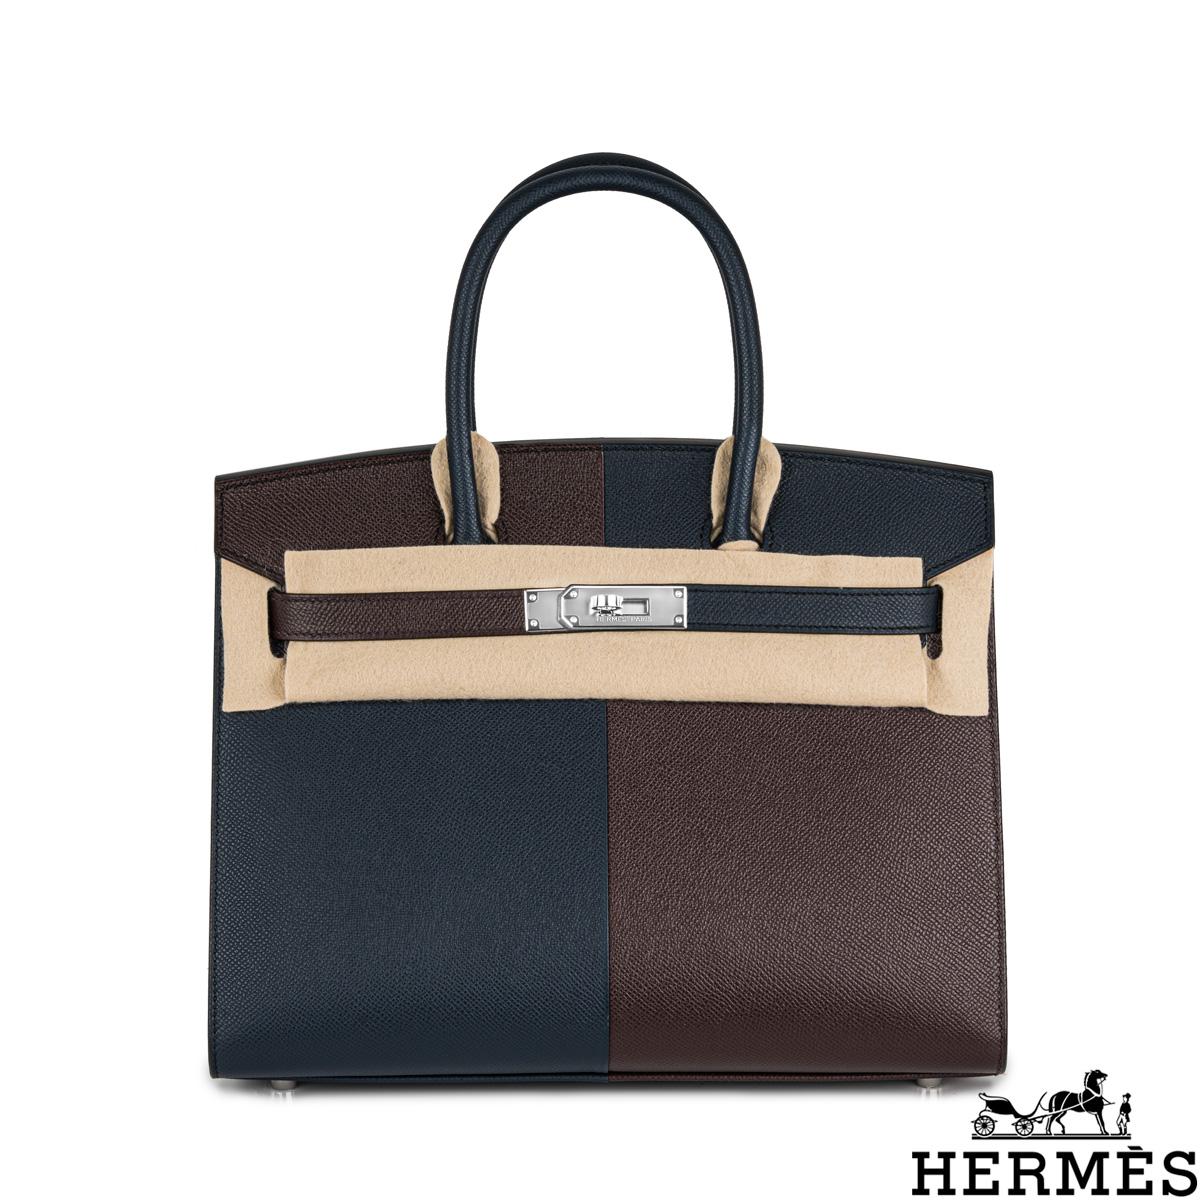 A stunning Hermès Birkin 30cm Casaque handbag. The exterior of this Birkin features 